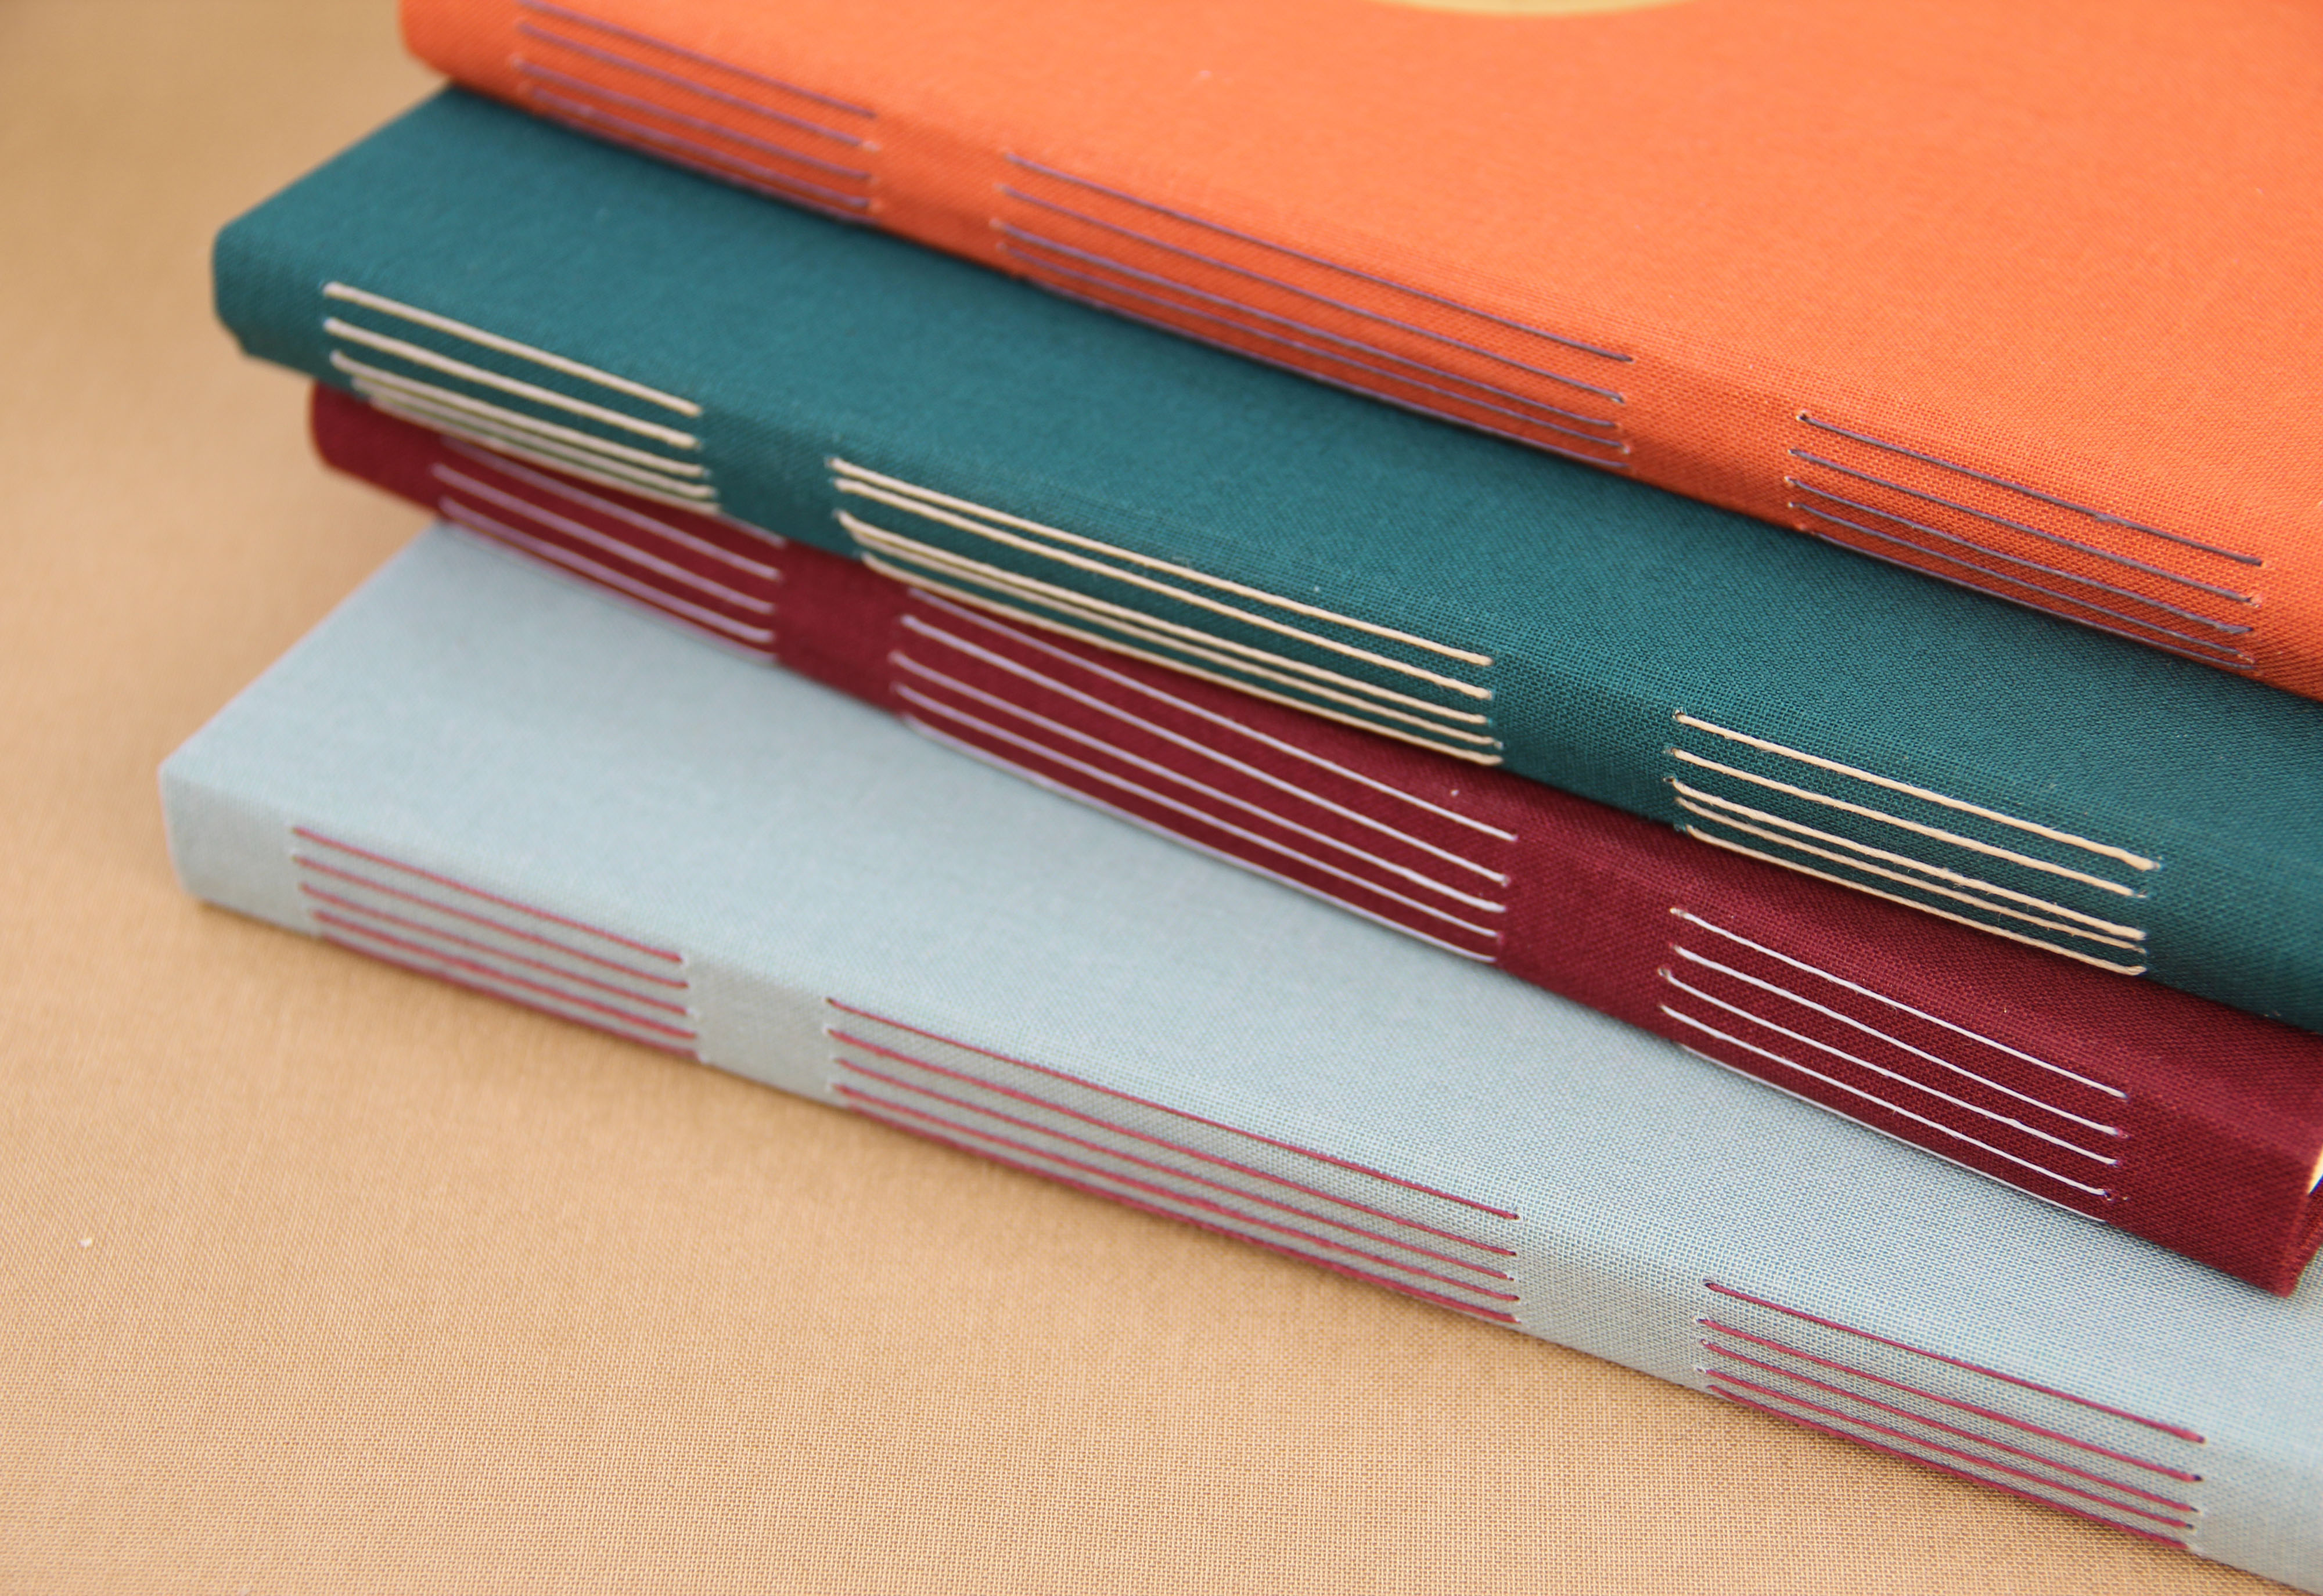 Bookbinding workshop - make a hand sewn journal